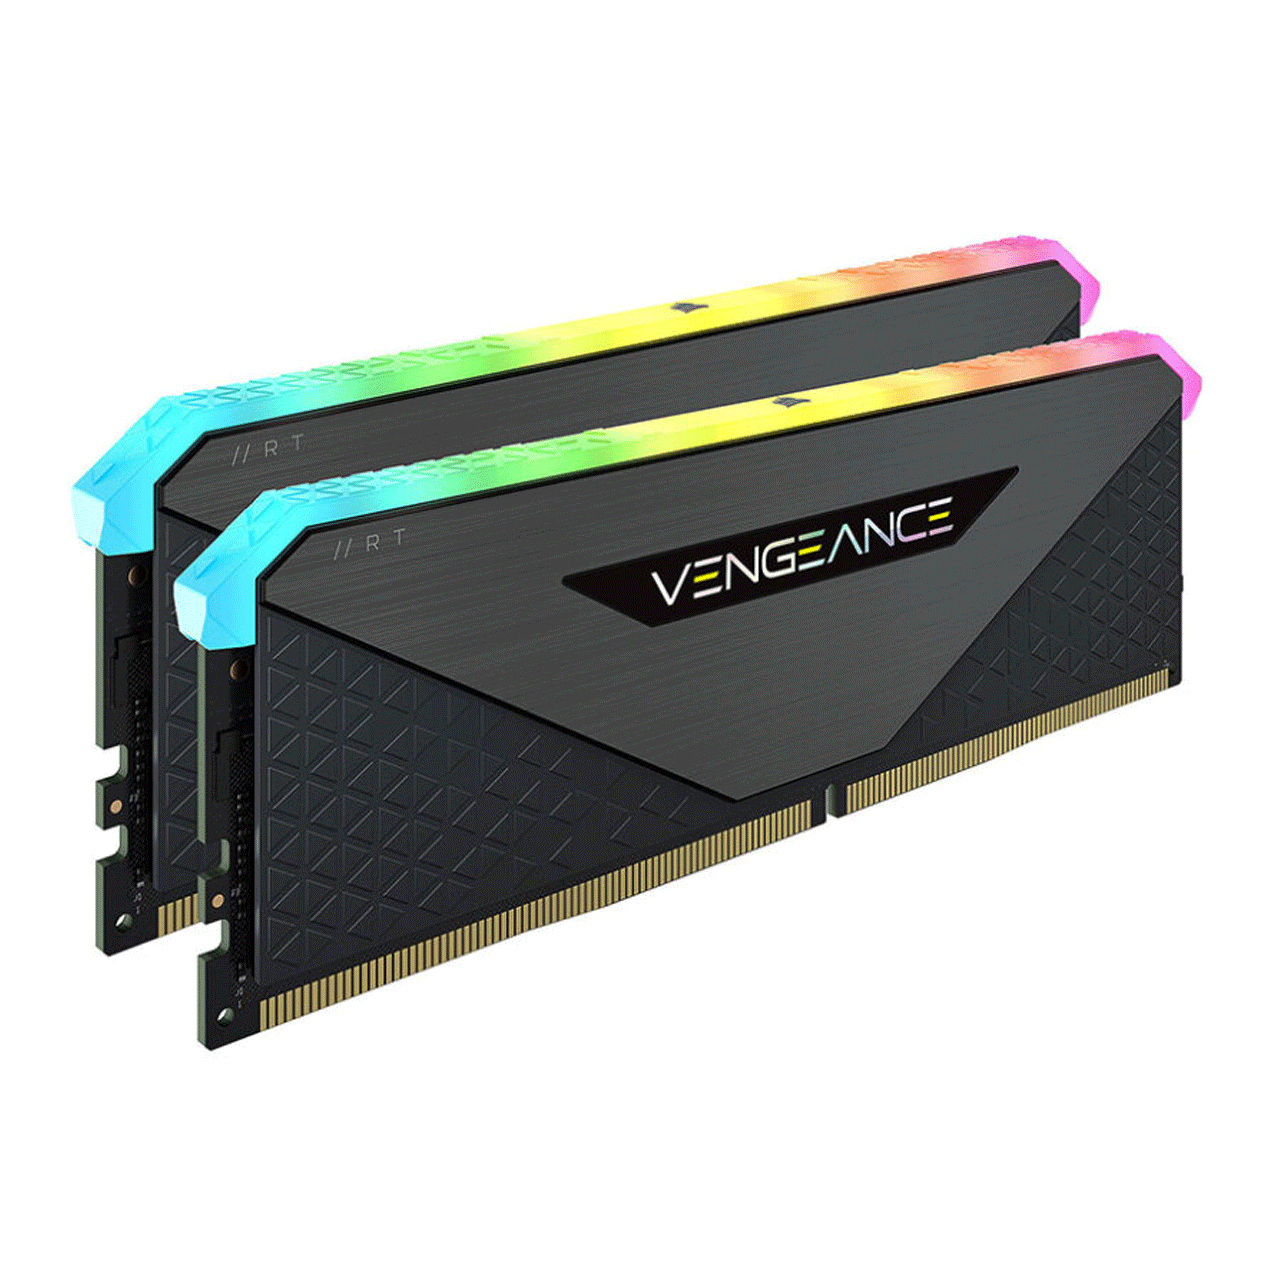 Corsair-VENGEANCE-RGB-RT-Black-16GB-8-GBx2-3600MHz-CL18-DDR4-Memory